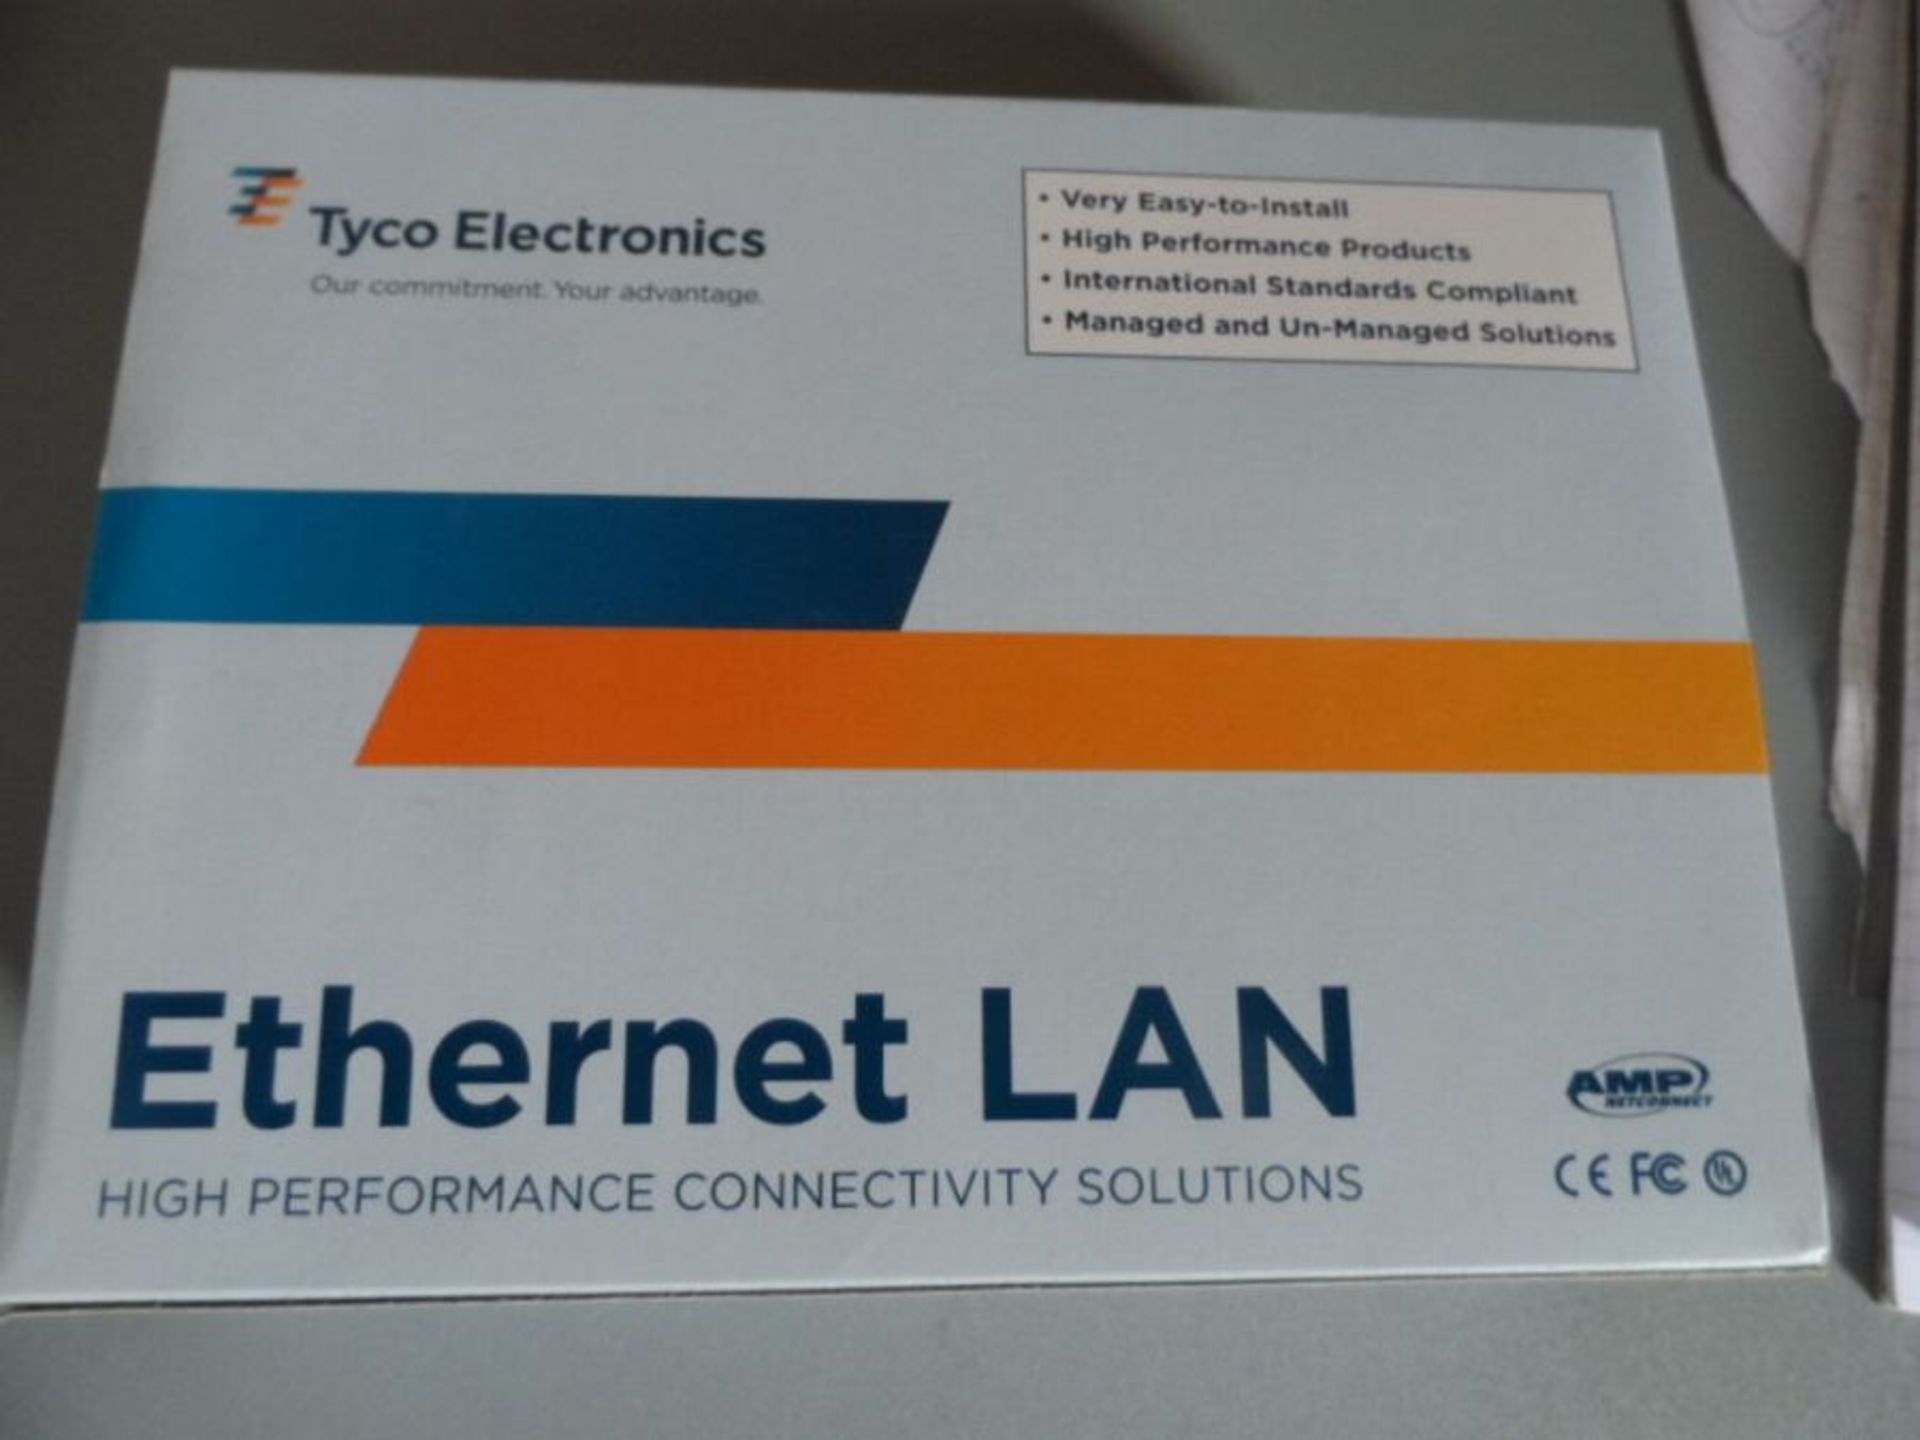 30 x Tyco 10 / 100 Fibre Media Converter 1 port Desktop Switch - Ethernet LAN 4390206 - Image 2 of 4